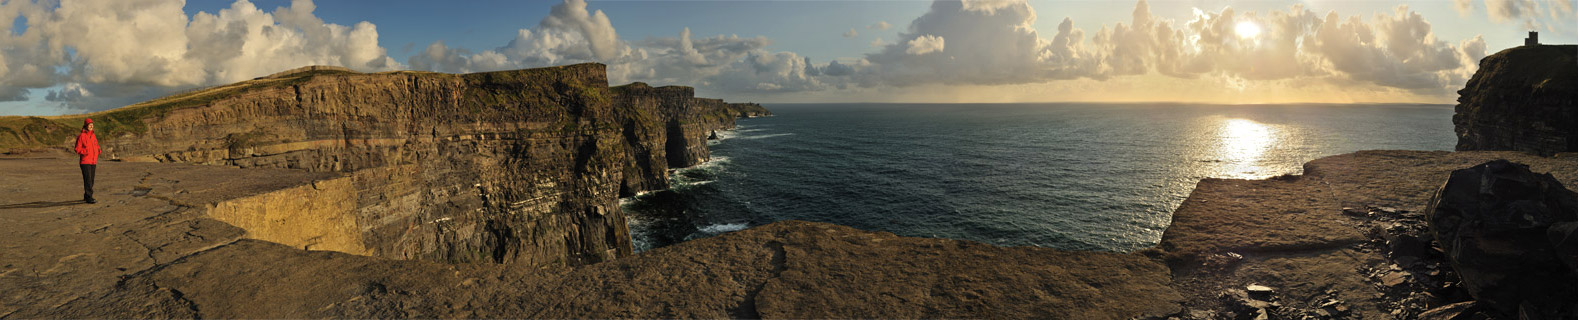 Panorama - Cliffs of Noher - Irland